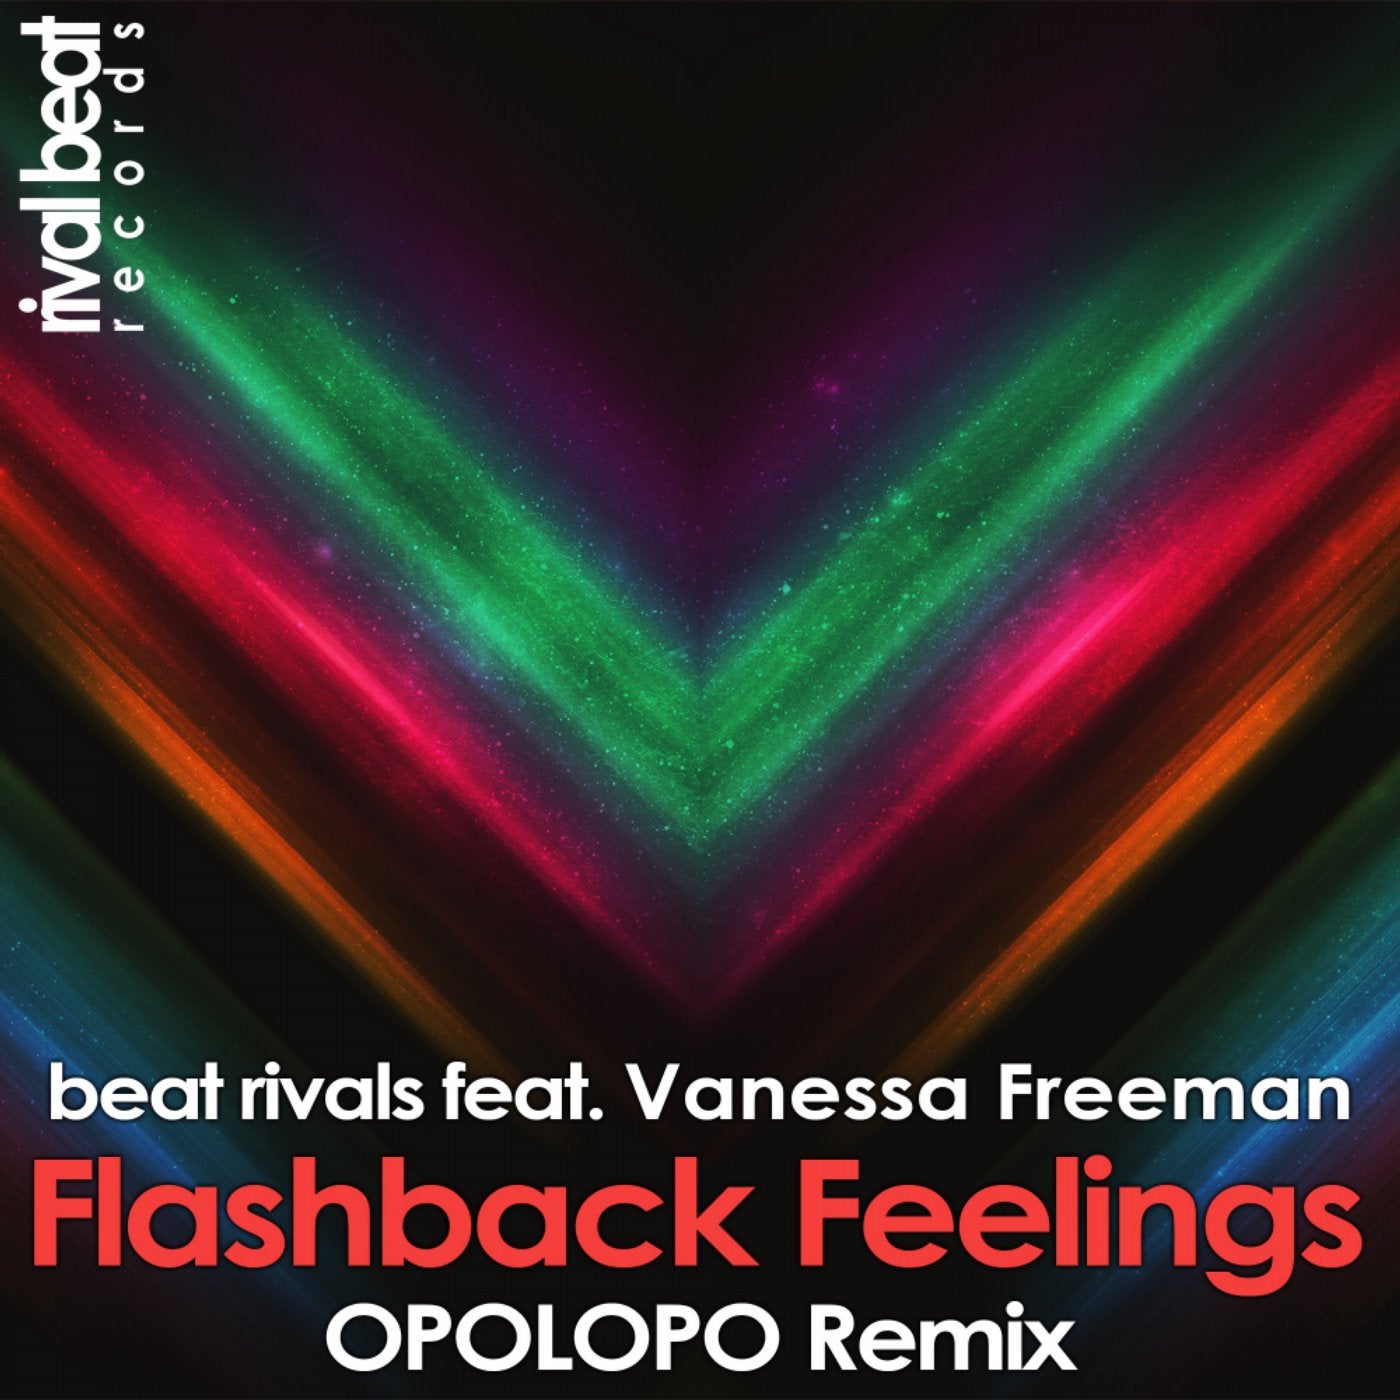 Flashback Feelings (Opolopo Remix)